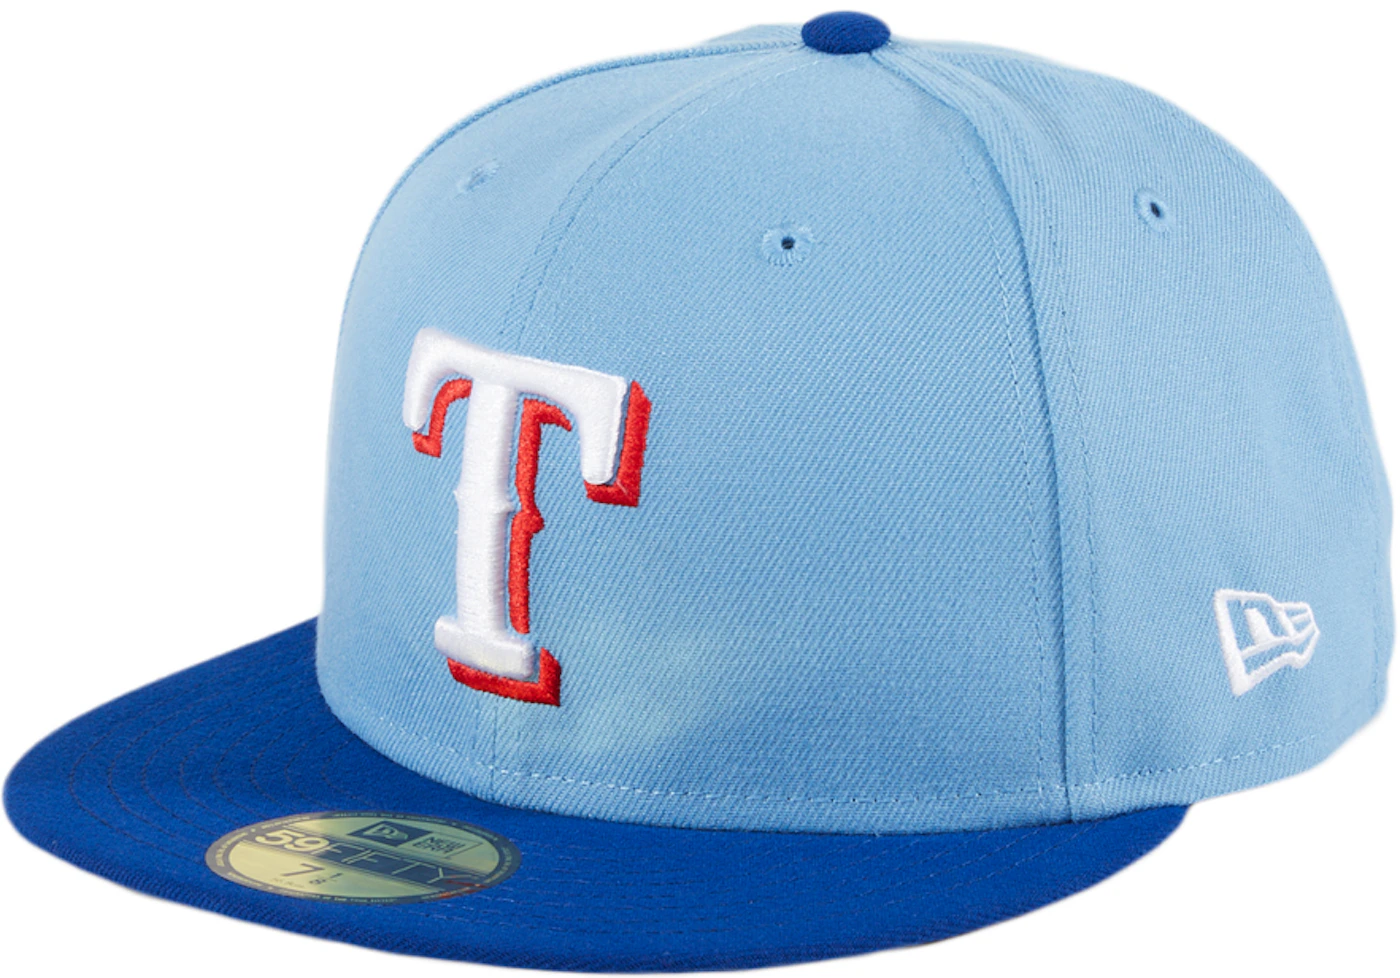 New Era 59FIFTY Texas Rangers Final Season Patch Icy UV Hat - Royal, Light Blue Royal / 7 1/8